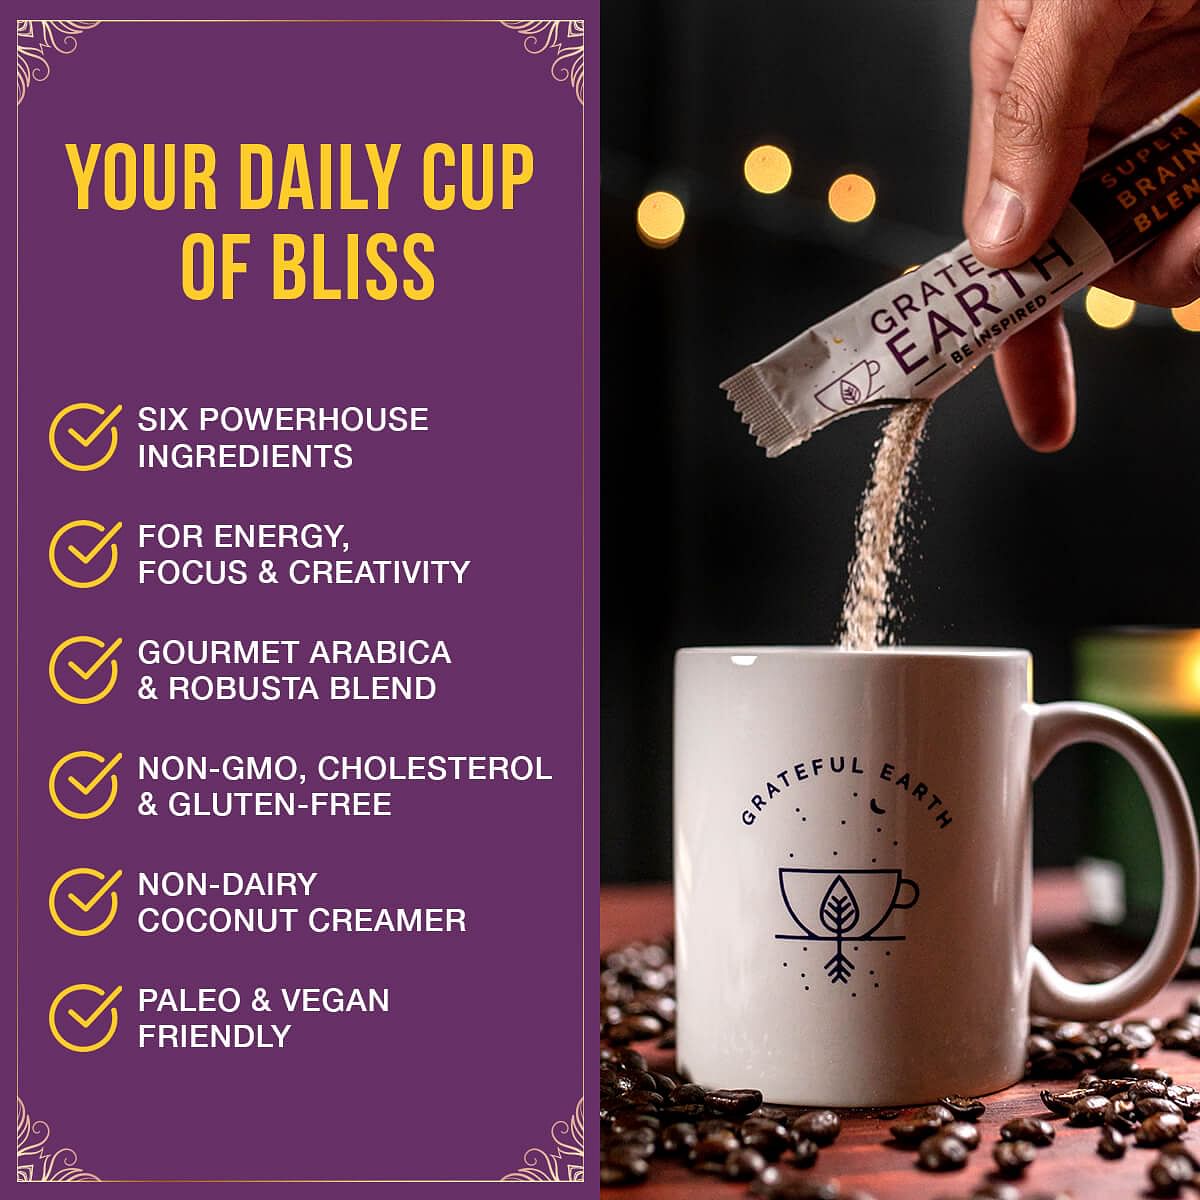 Instant Coffee Benefits